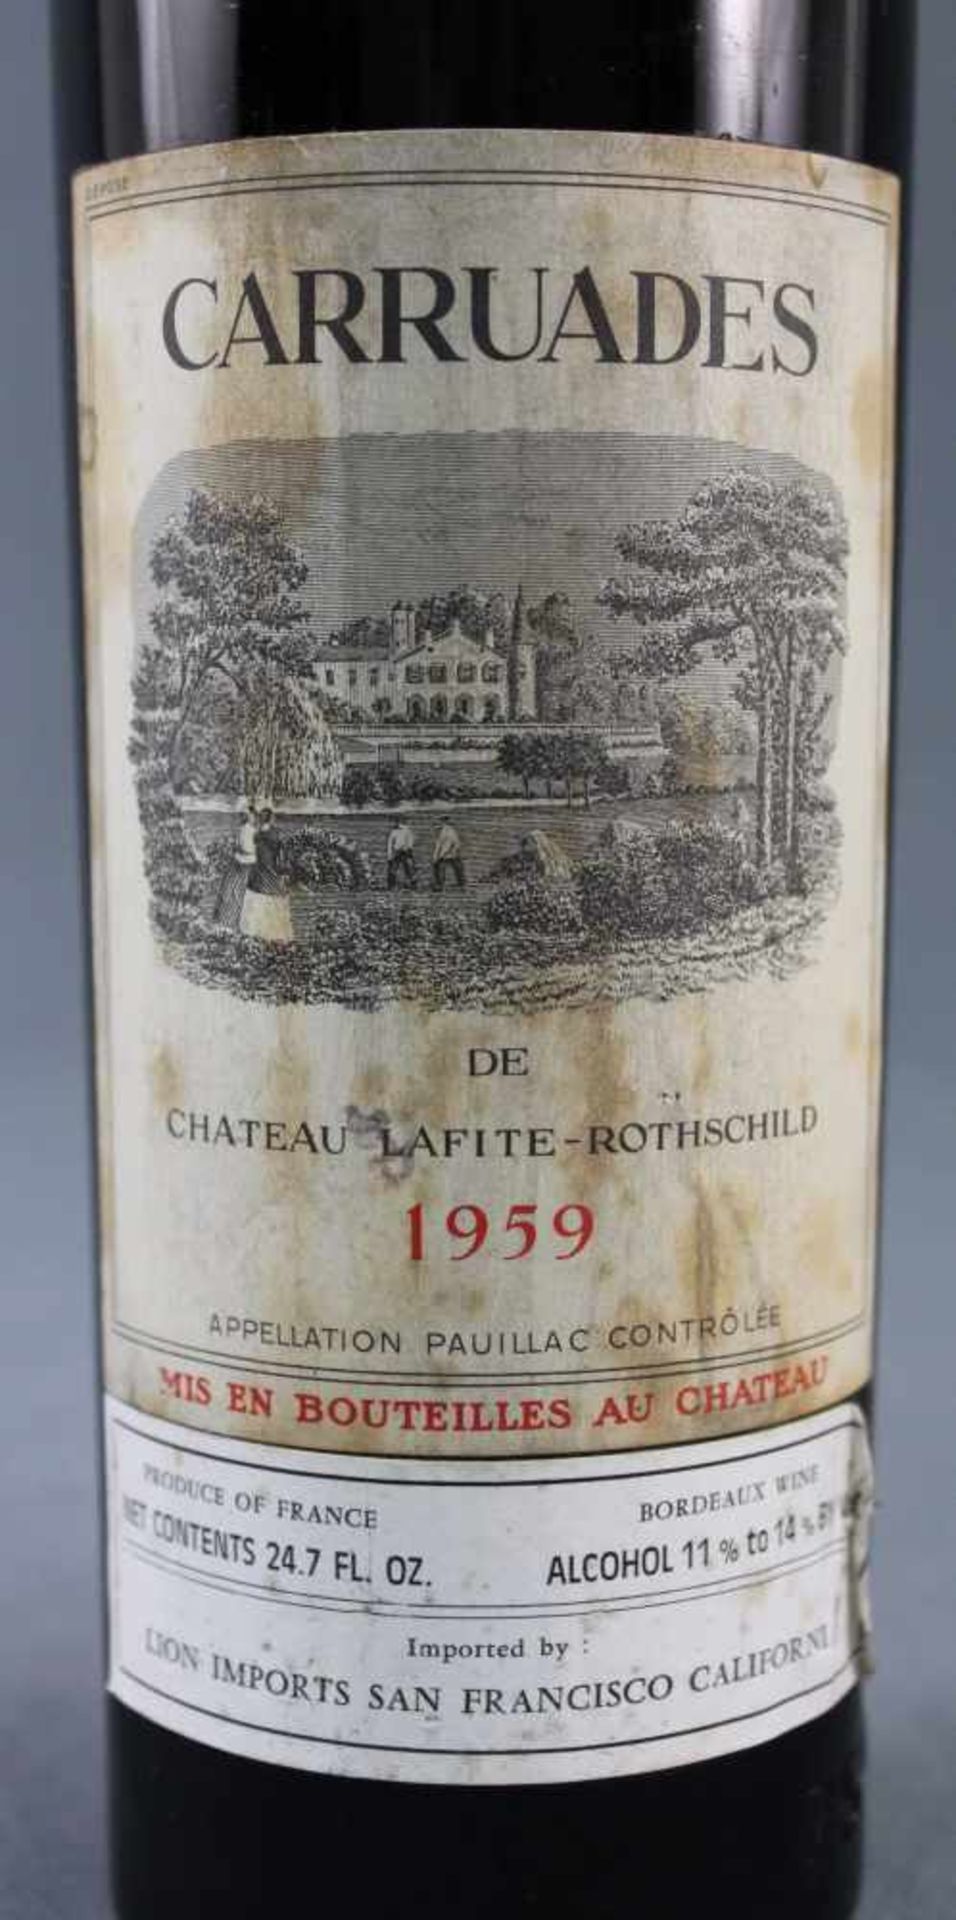 1959 Carruades de Chateau Lafite - Rothschild. Paulliac AC.Eine ganze Flasche Rotwein 75 cl. - Bild 5 aus 8